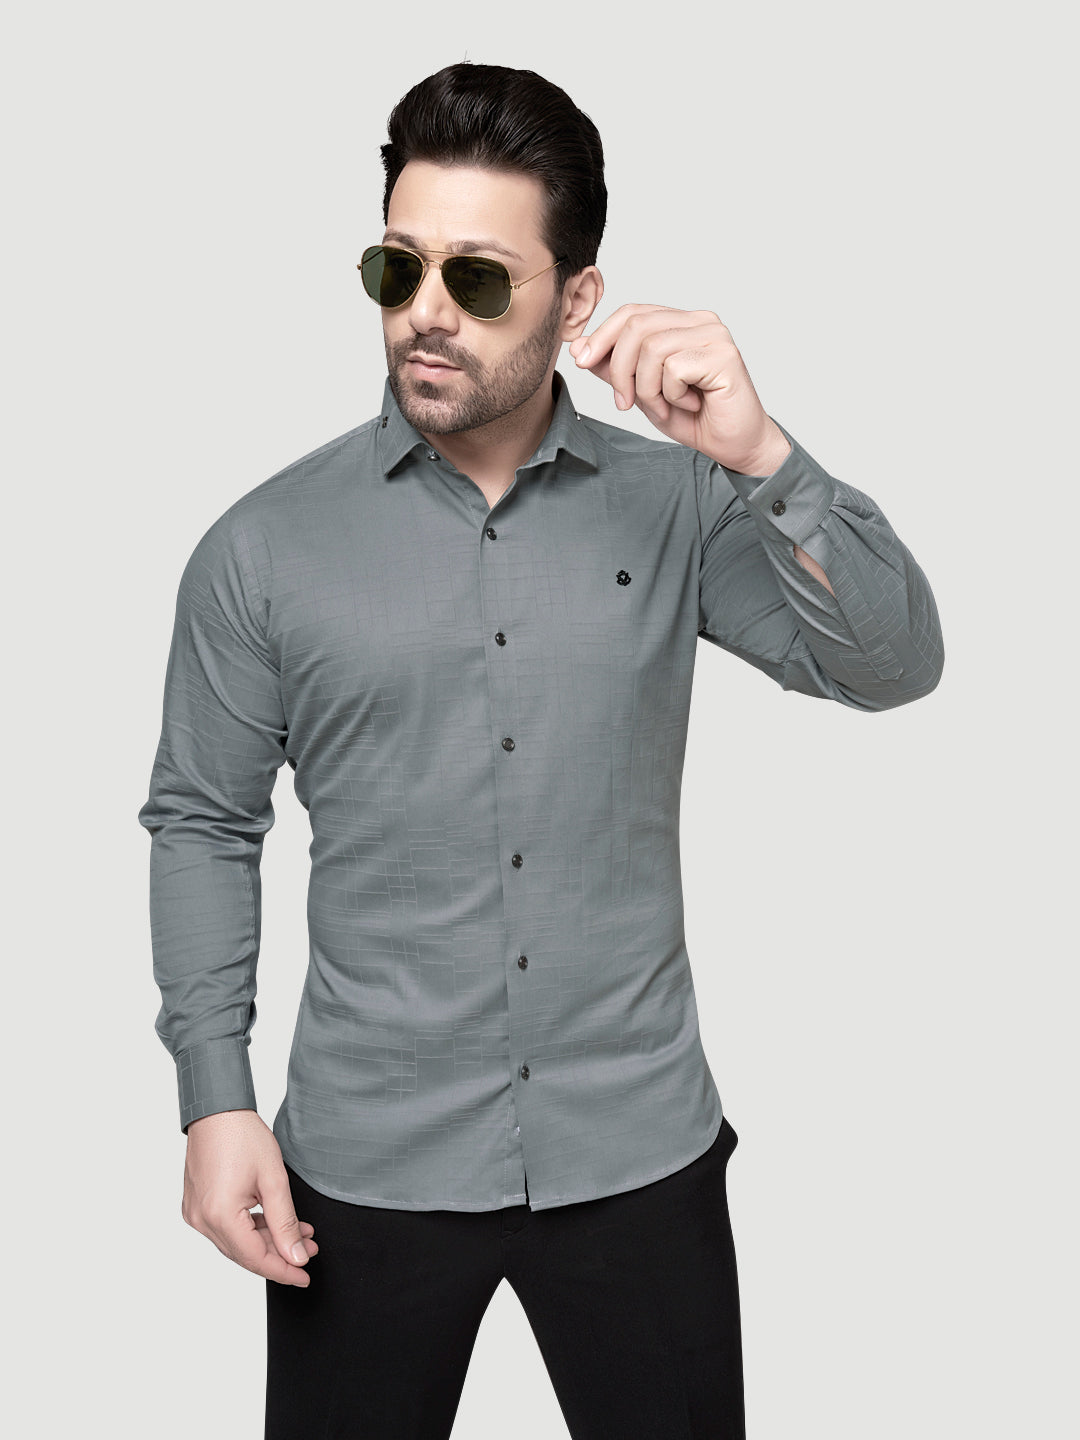 Men's Designer Shirt with Collar Accessory & Broach-6